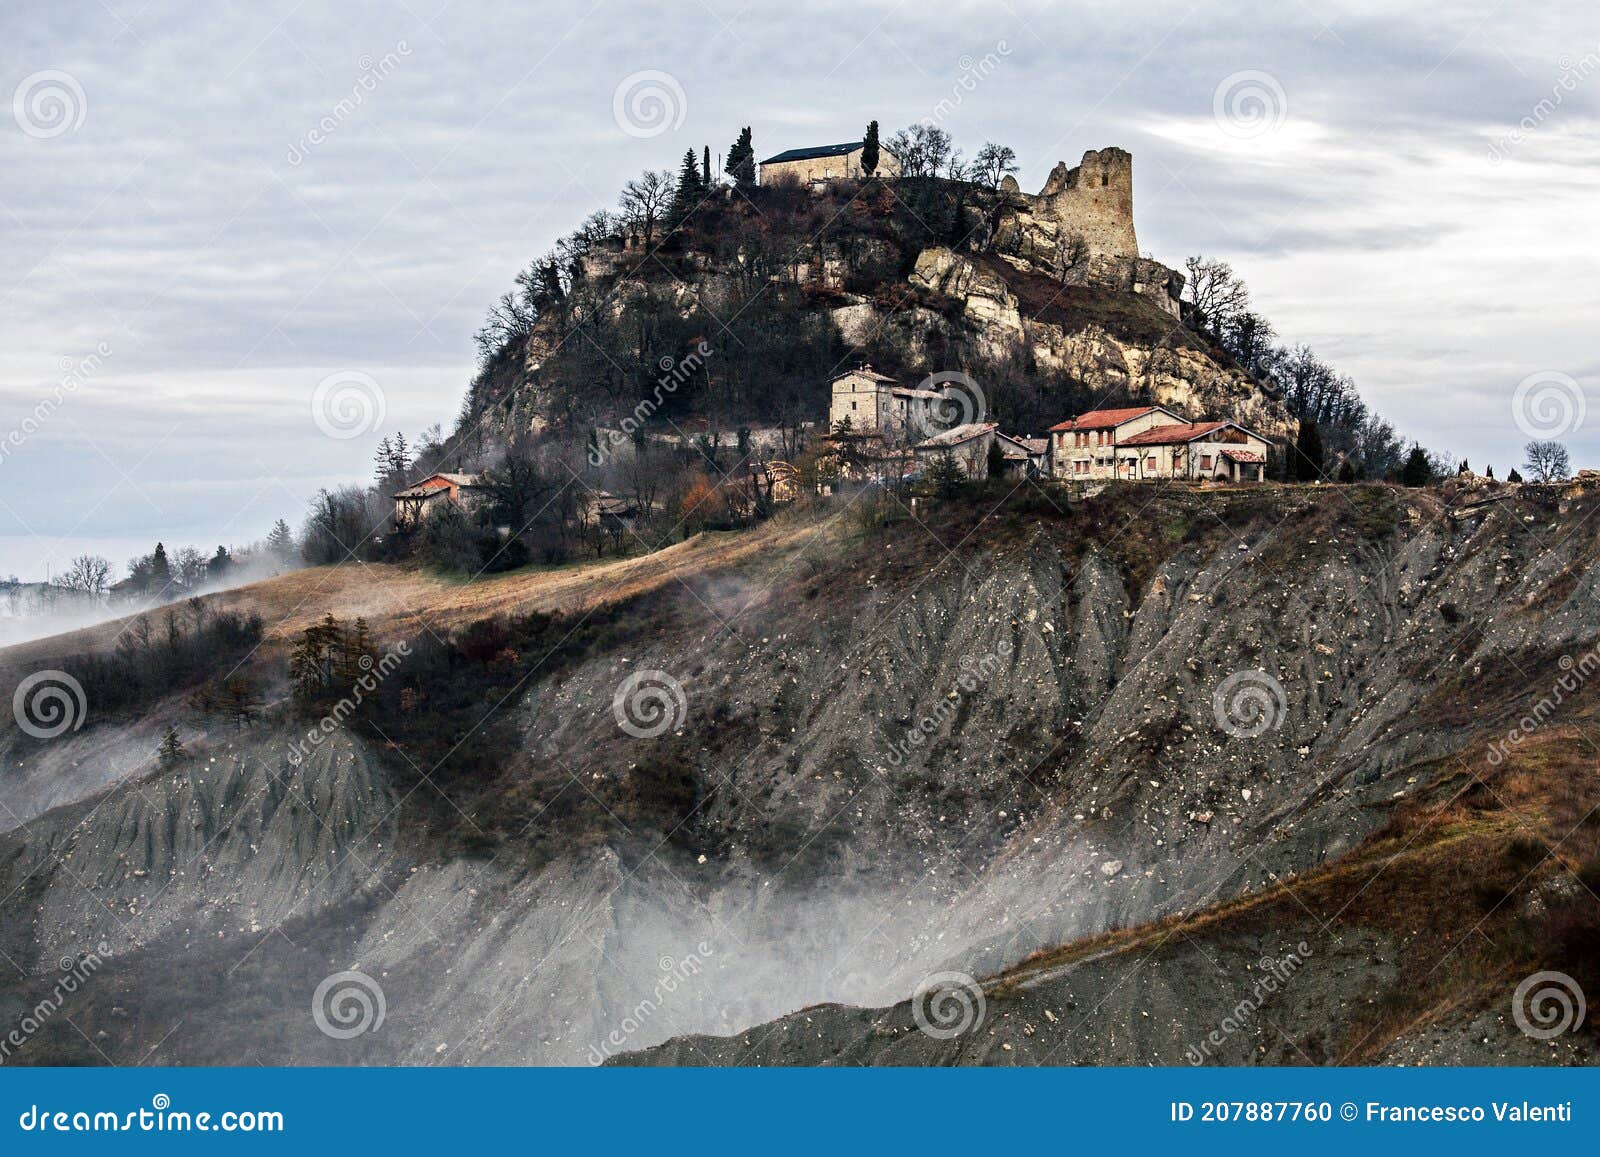 canossa castle and countryside badlands in fog, reggio emilia, italy